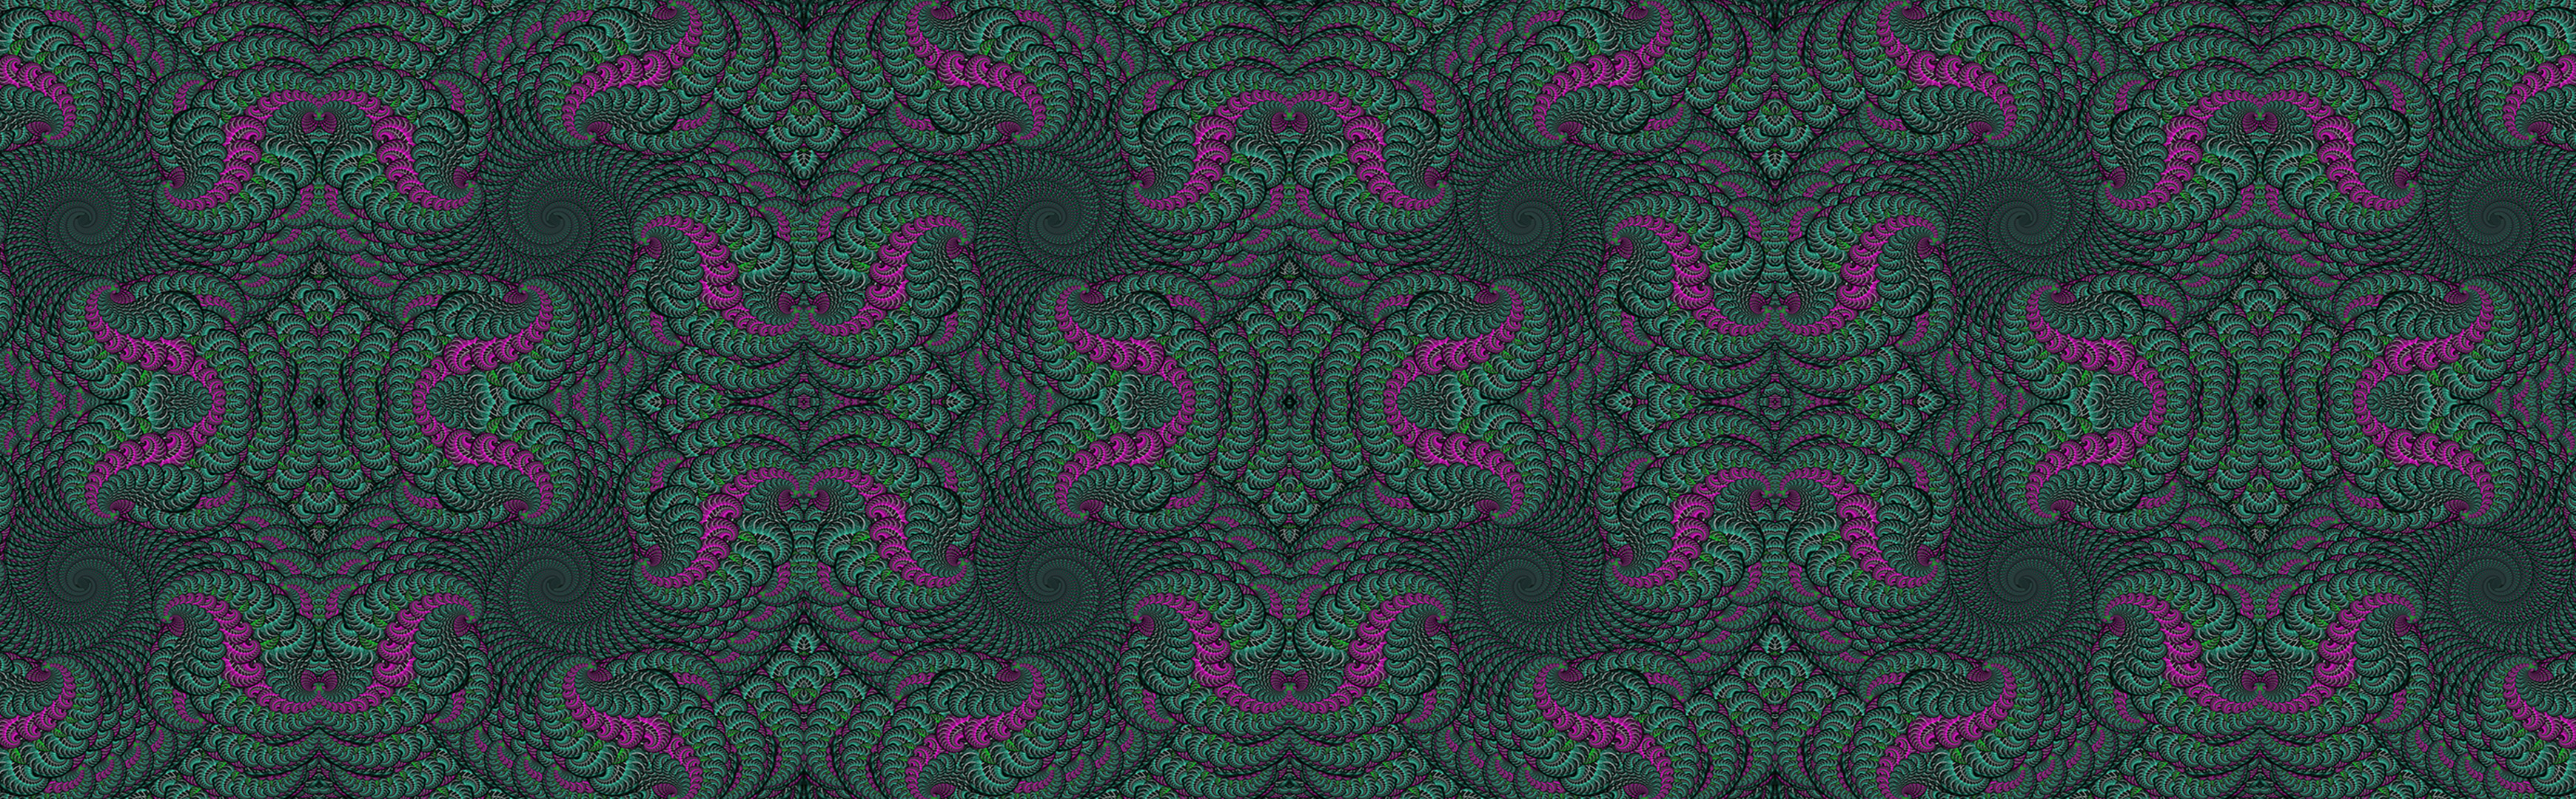 fractals, trippy - desktop wallpaper